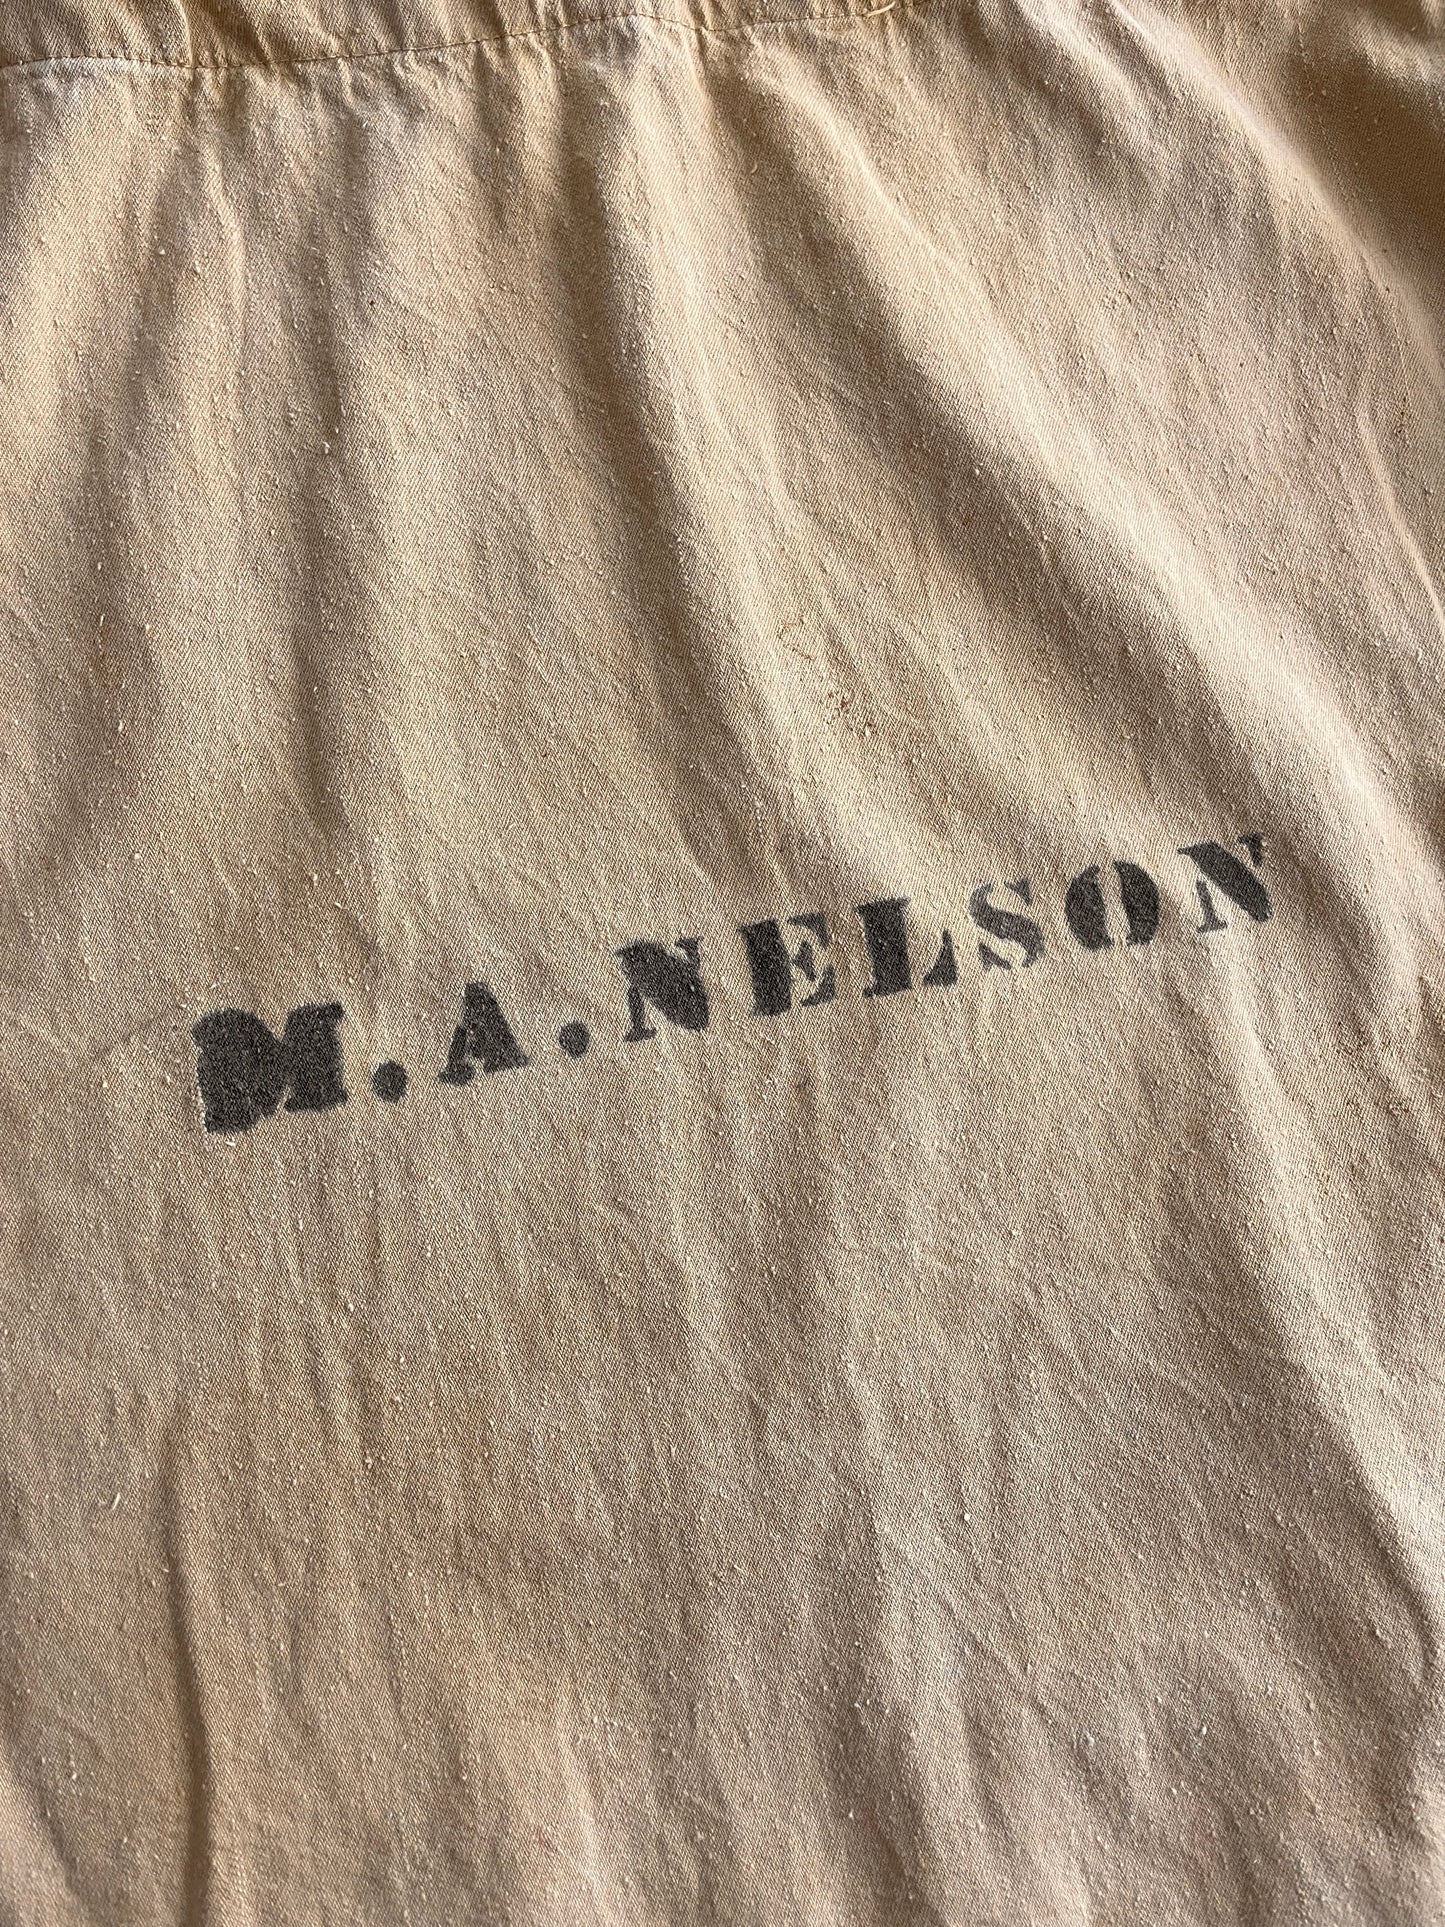 M.A. Nelson Laundry Bag